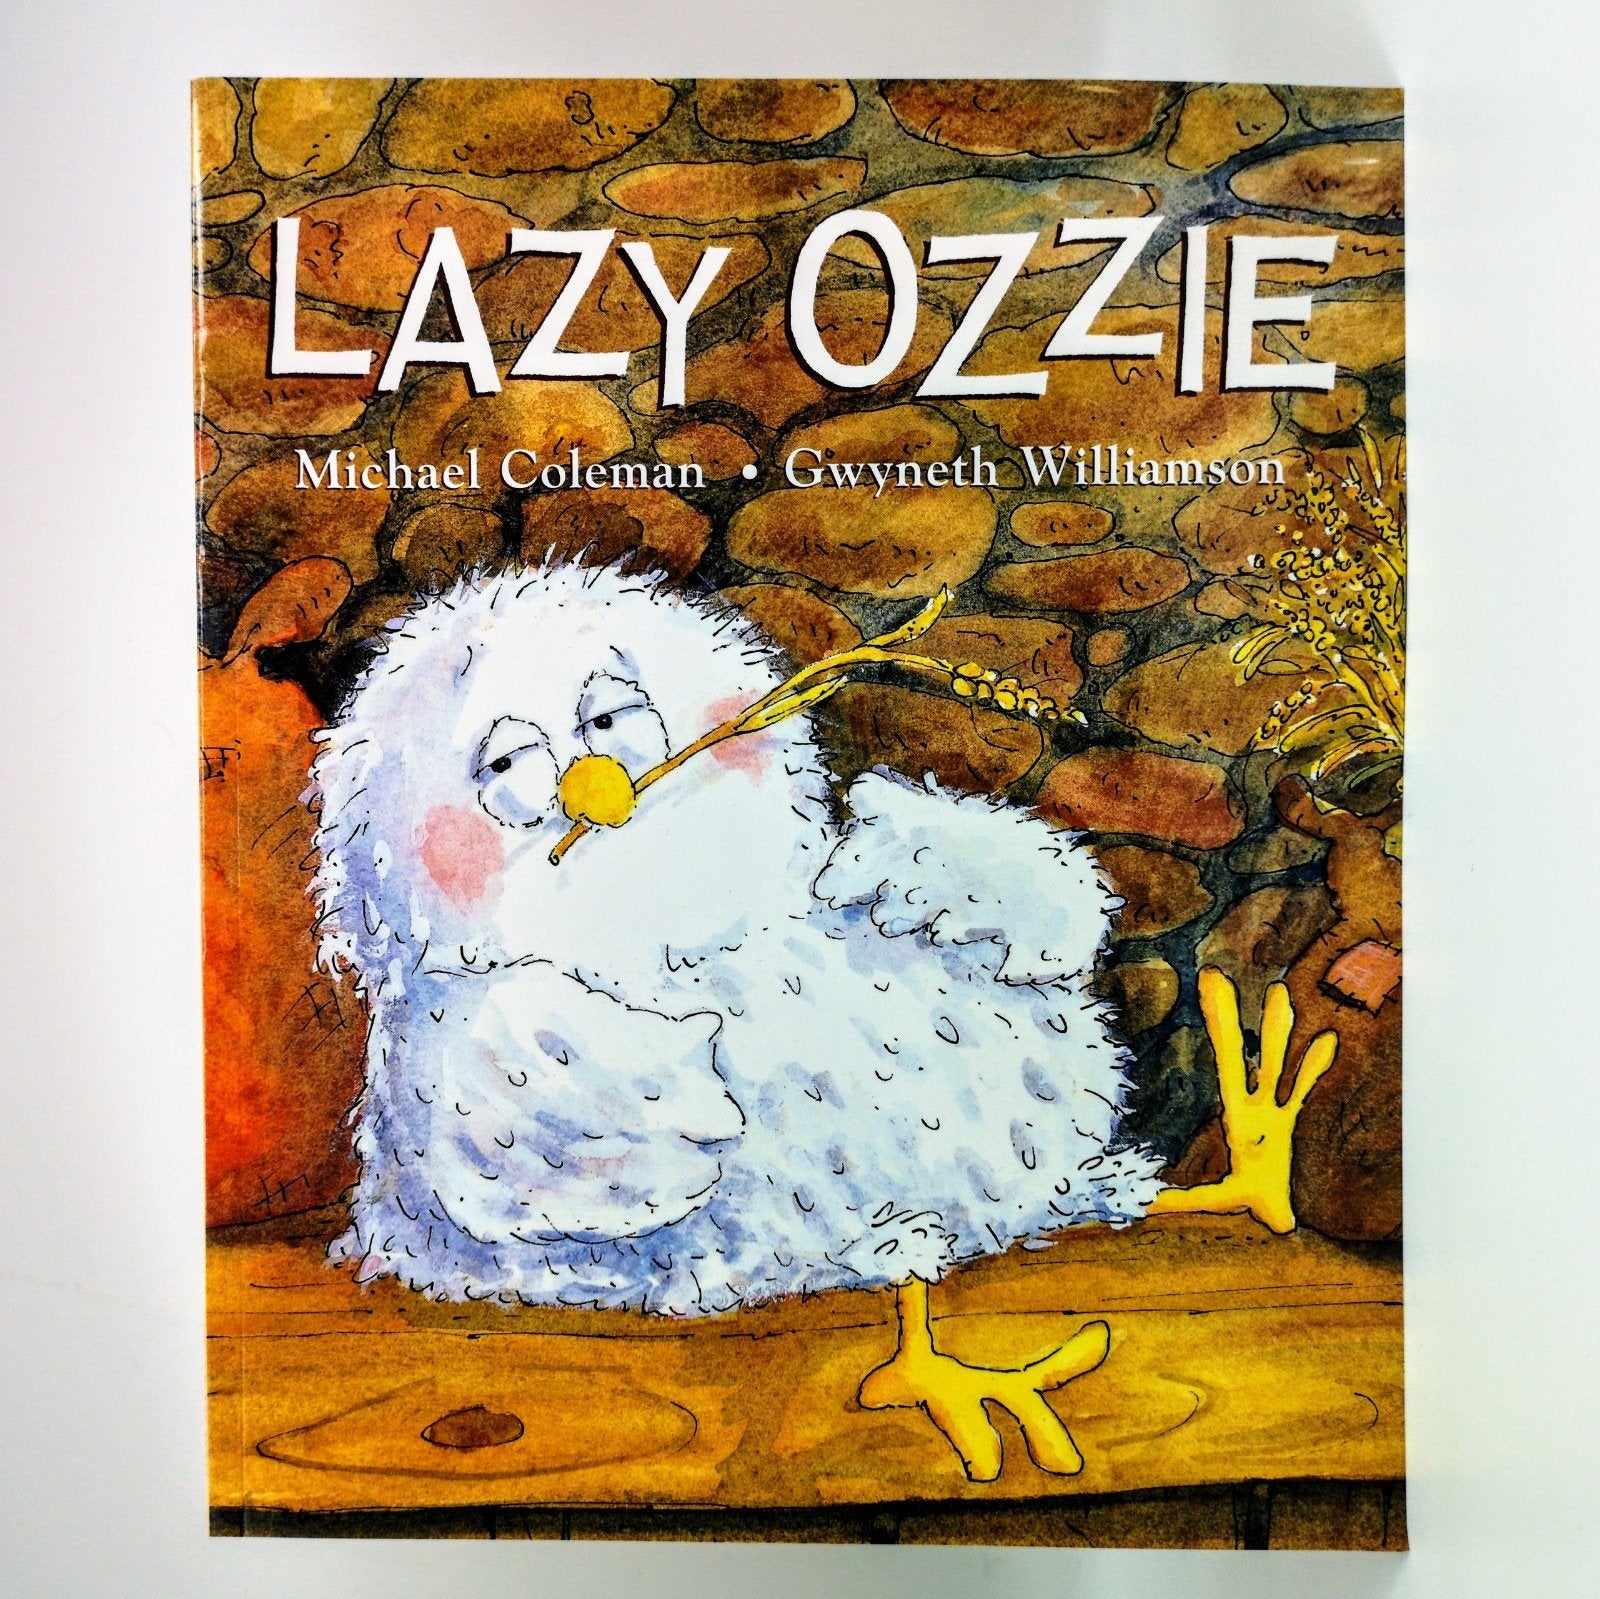 Lazy Ozzie by Michael Coleman (Author)